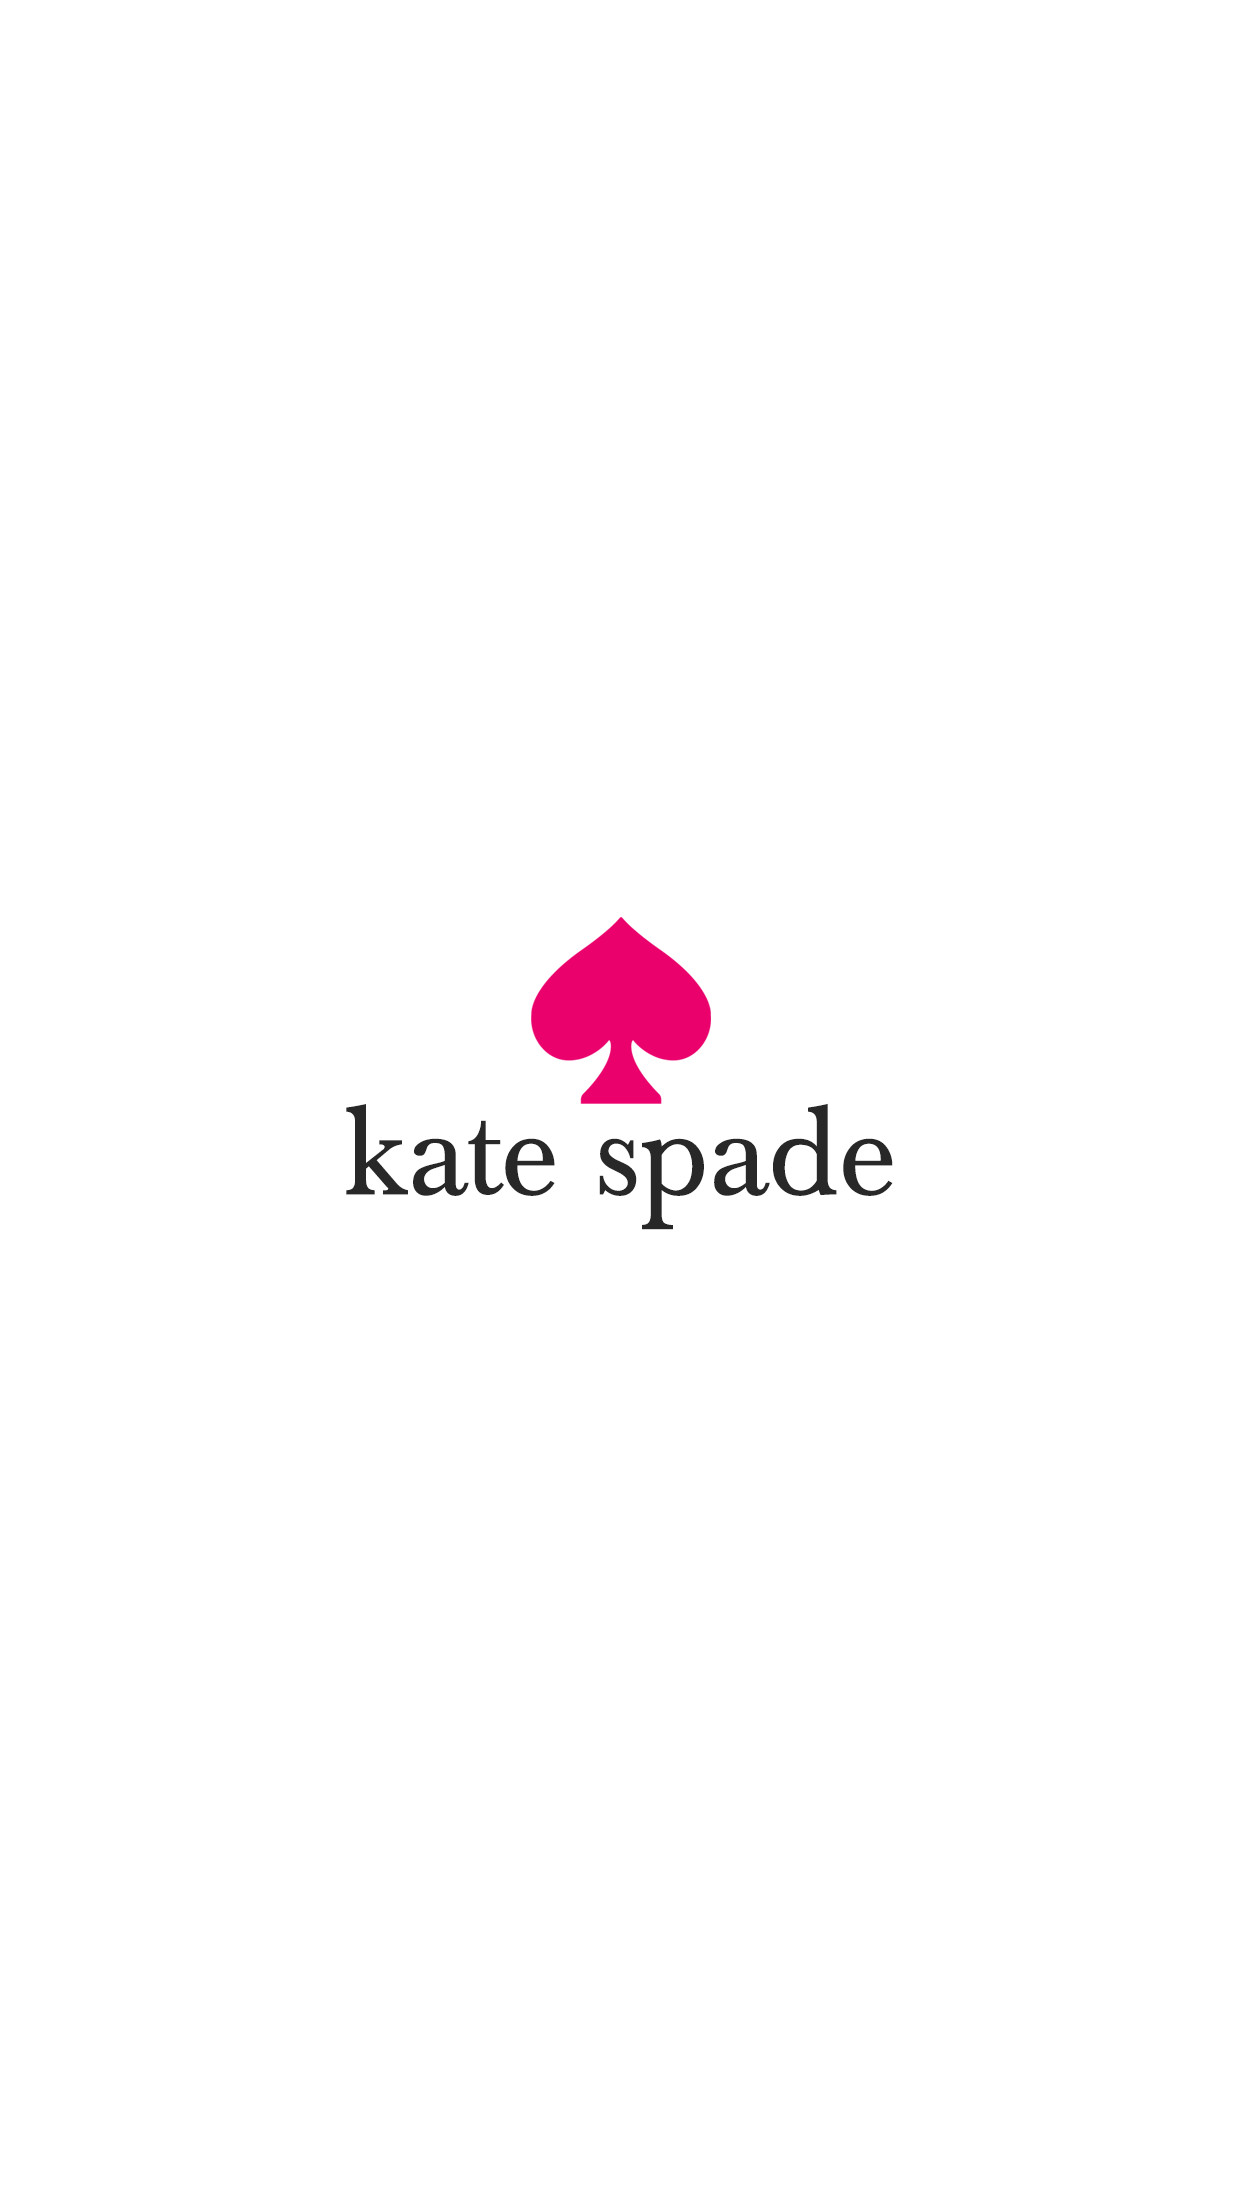 Kate spade hot pink iPhone Wallpaper Background